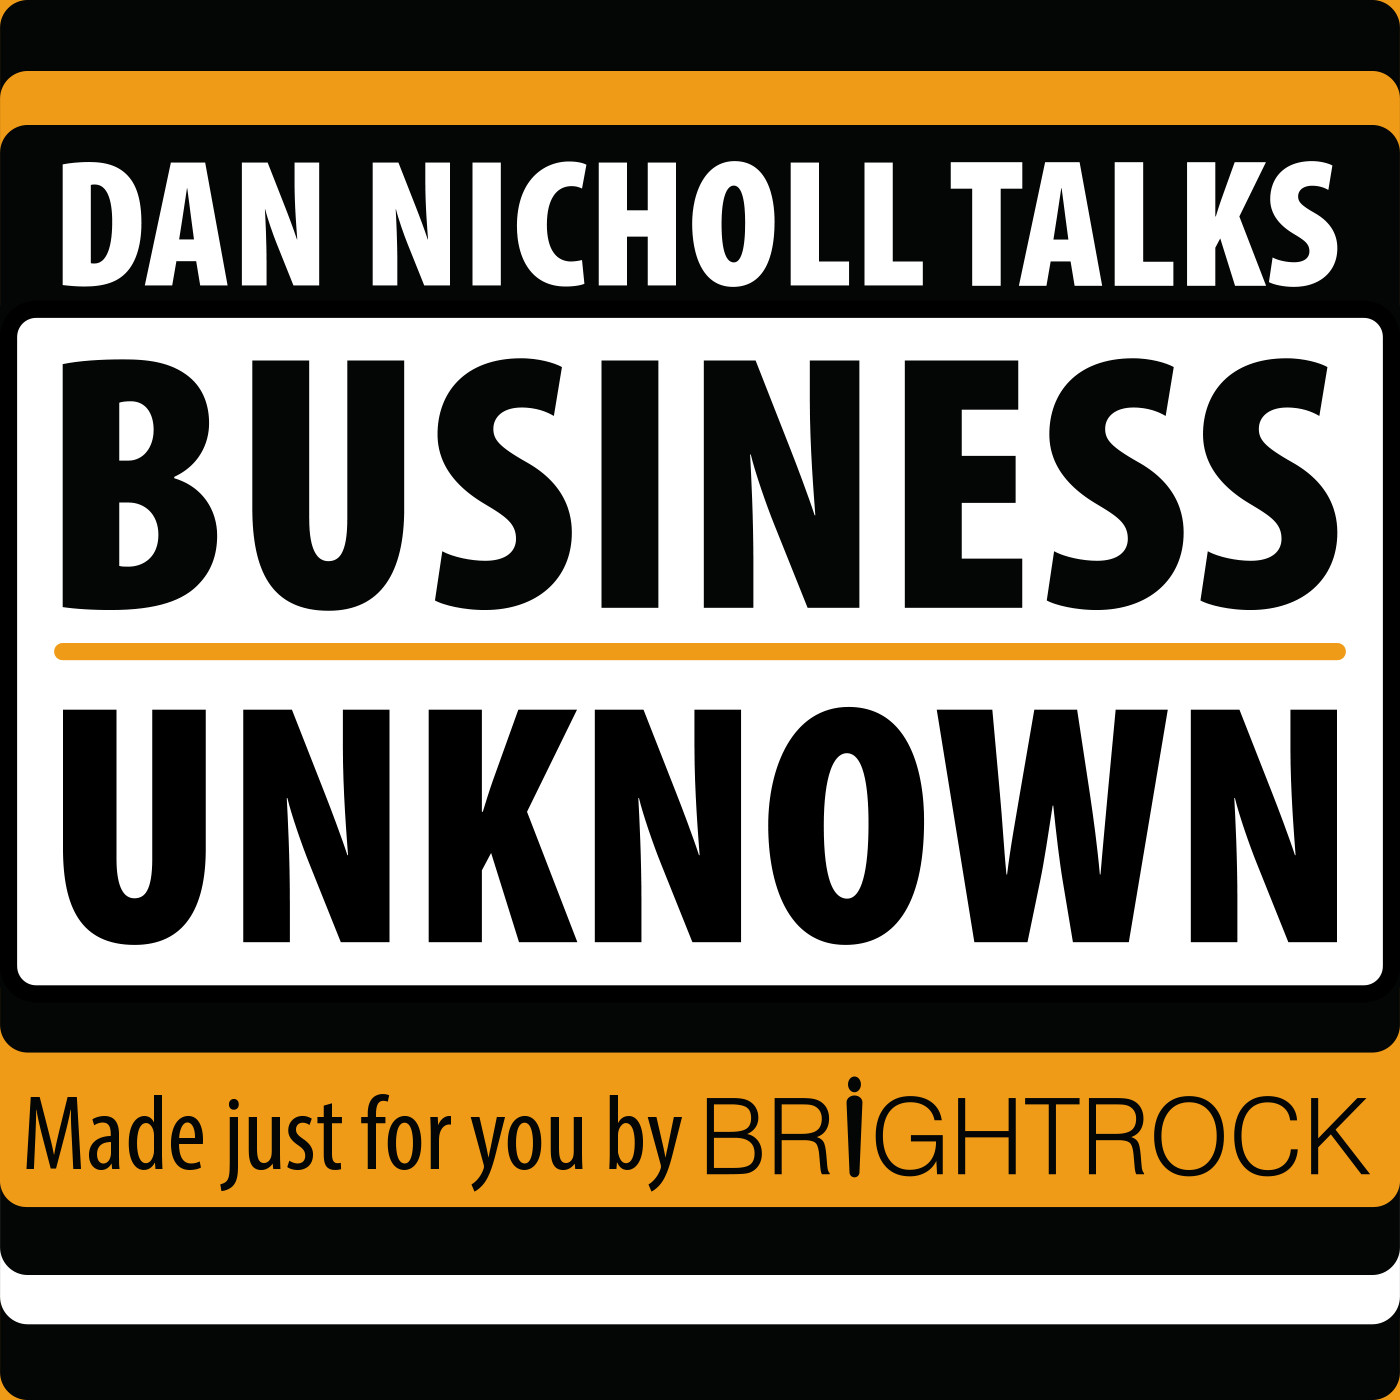 Dan Nicholl Talks Business Unknown with Michael Jordaan